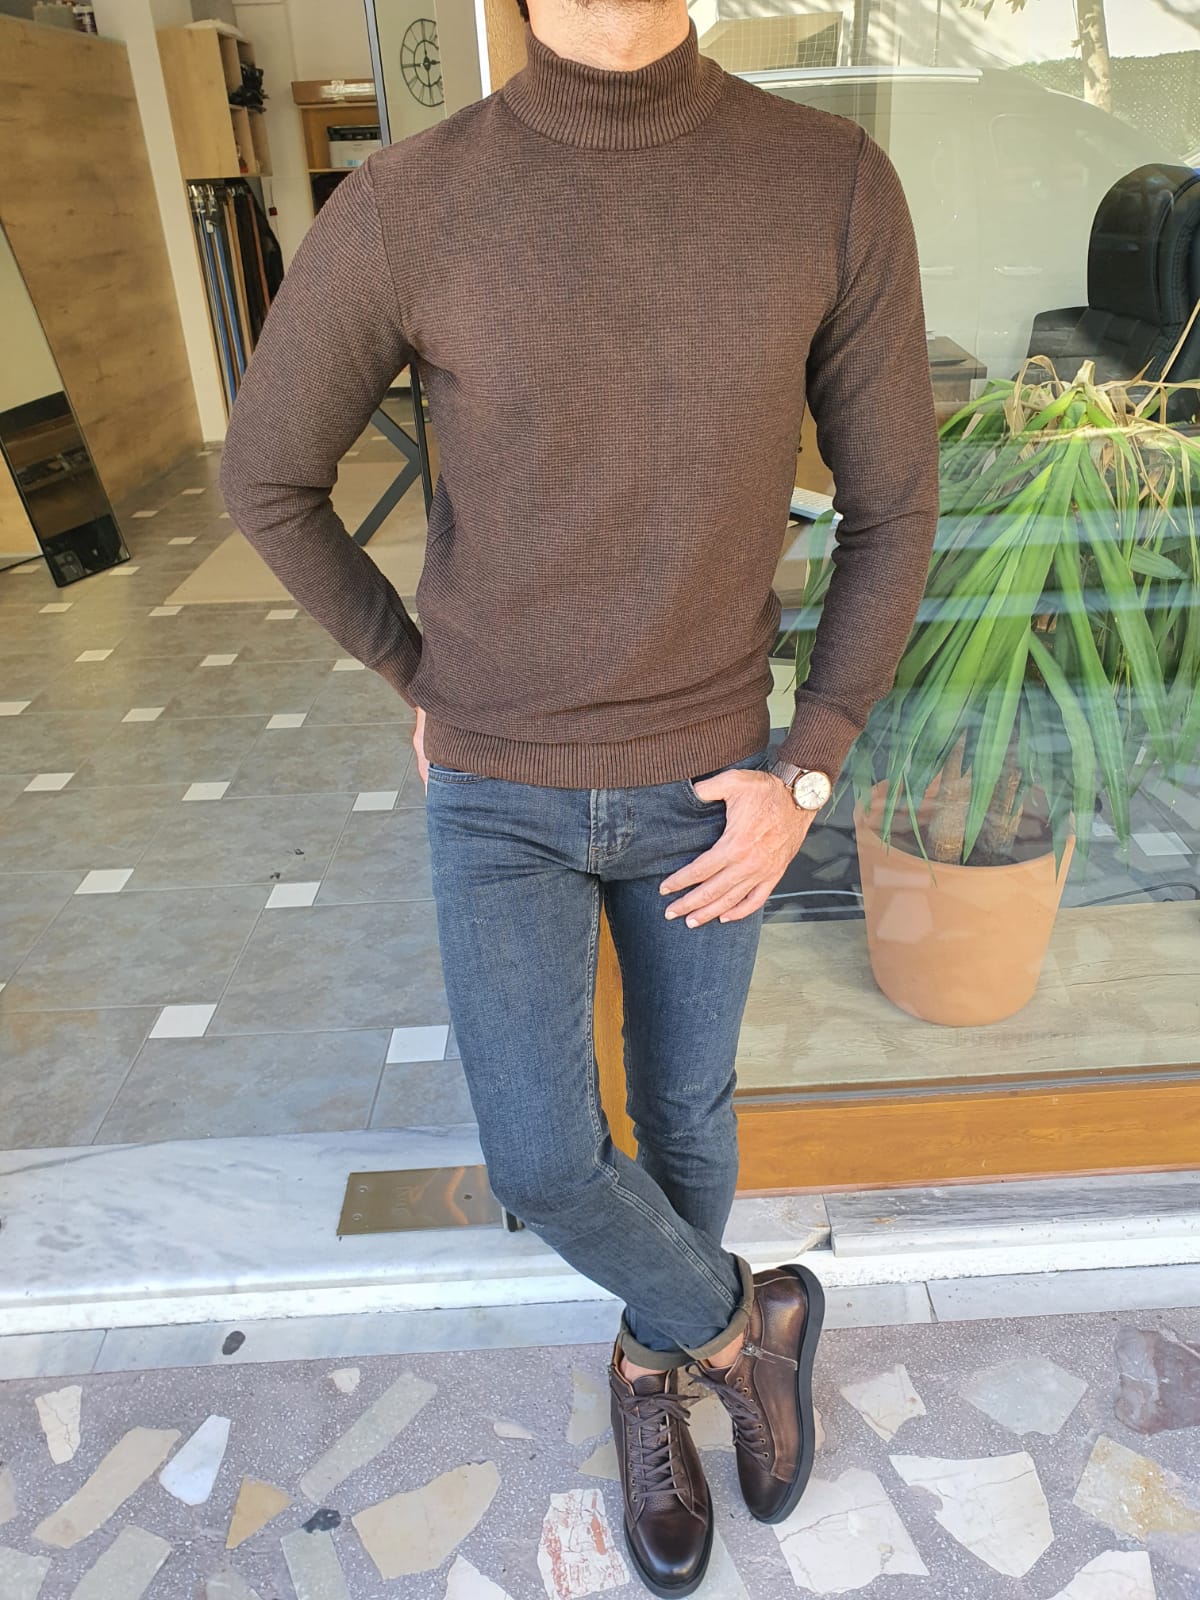 Lawton Brown Slim Fit Mock Turtleneck Sweater